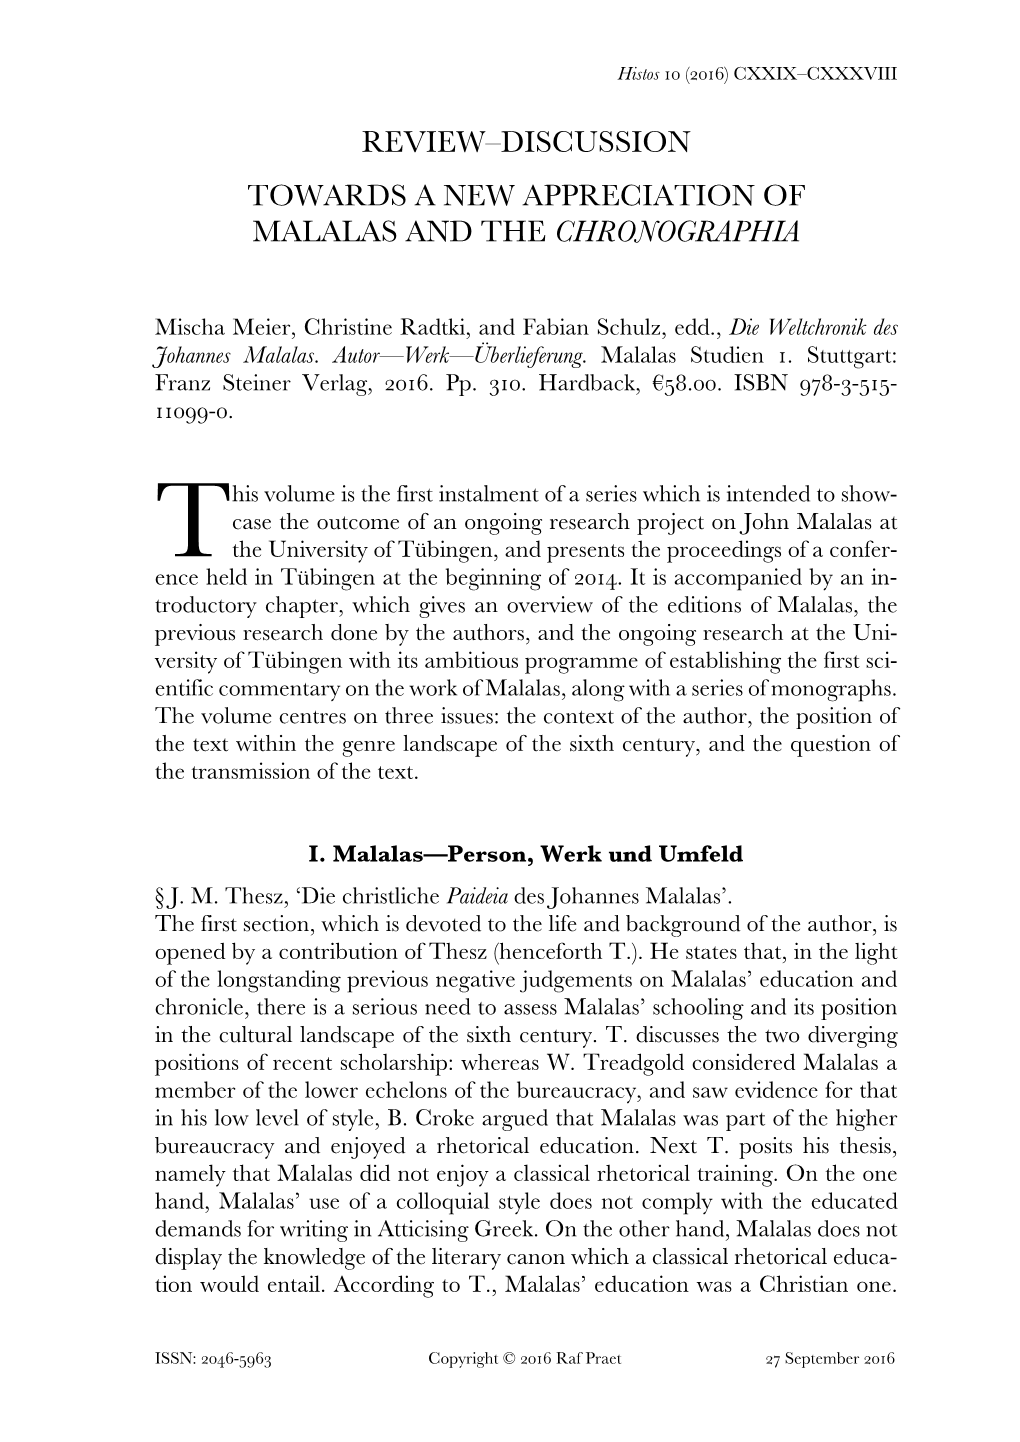 Towards a New Appreciation of Malalas and the Chronographia